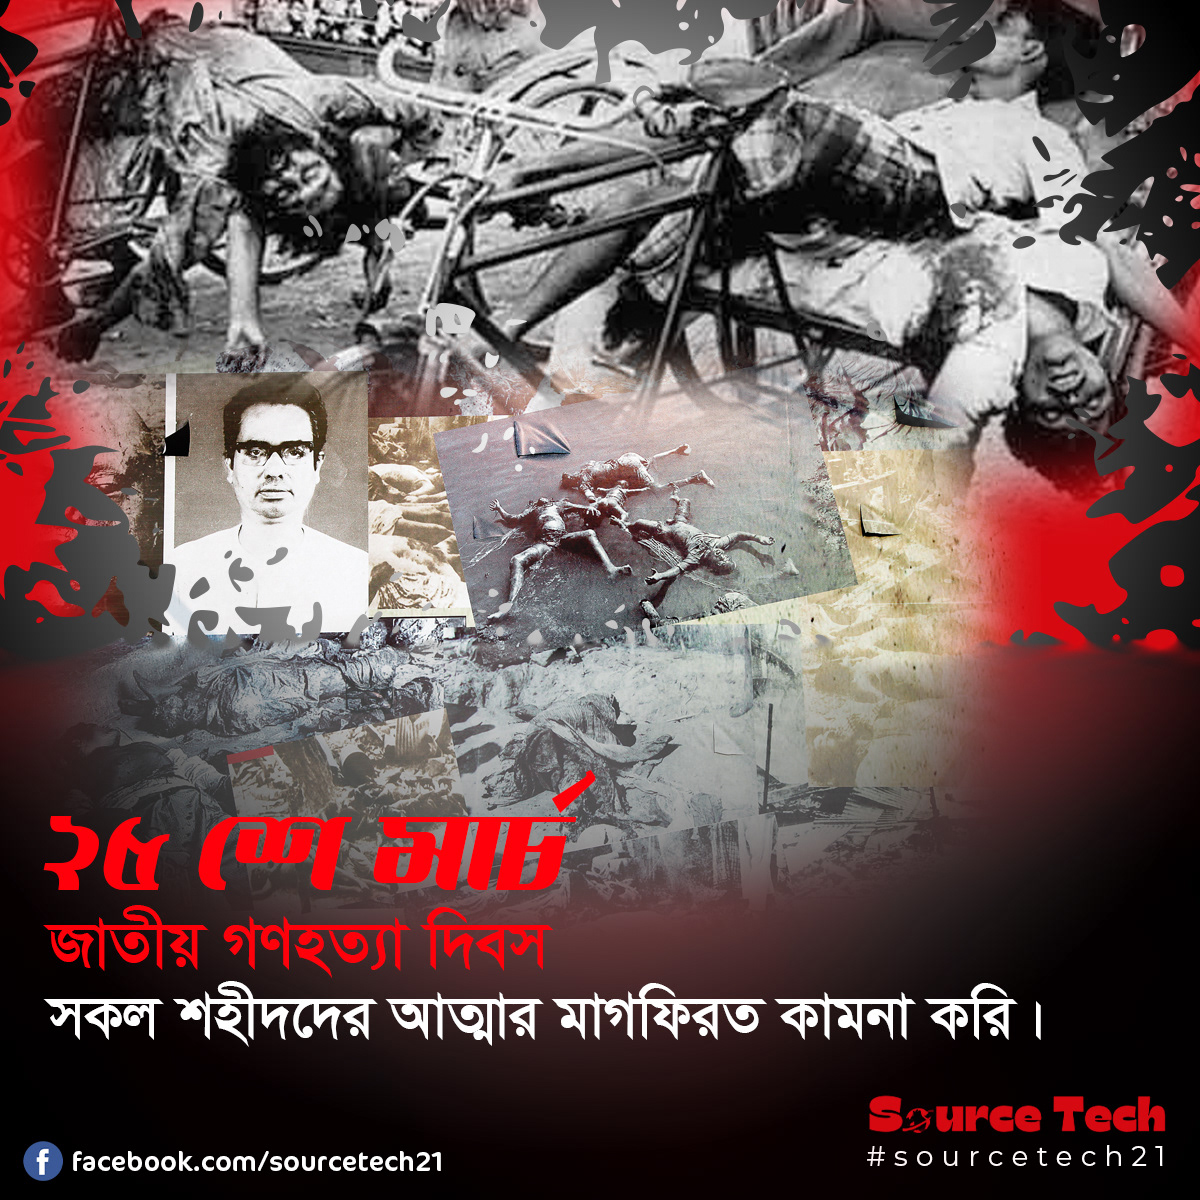 25 march 25 march 1971 25 march design 26March Bangladesh Gonohotta Dibosh kalorat Killing day march Poster Design